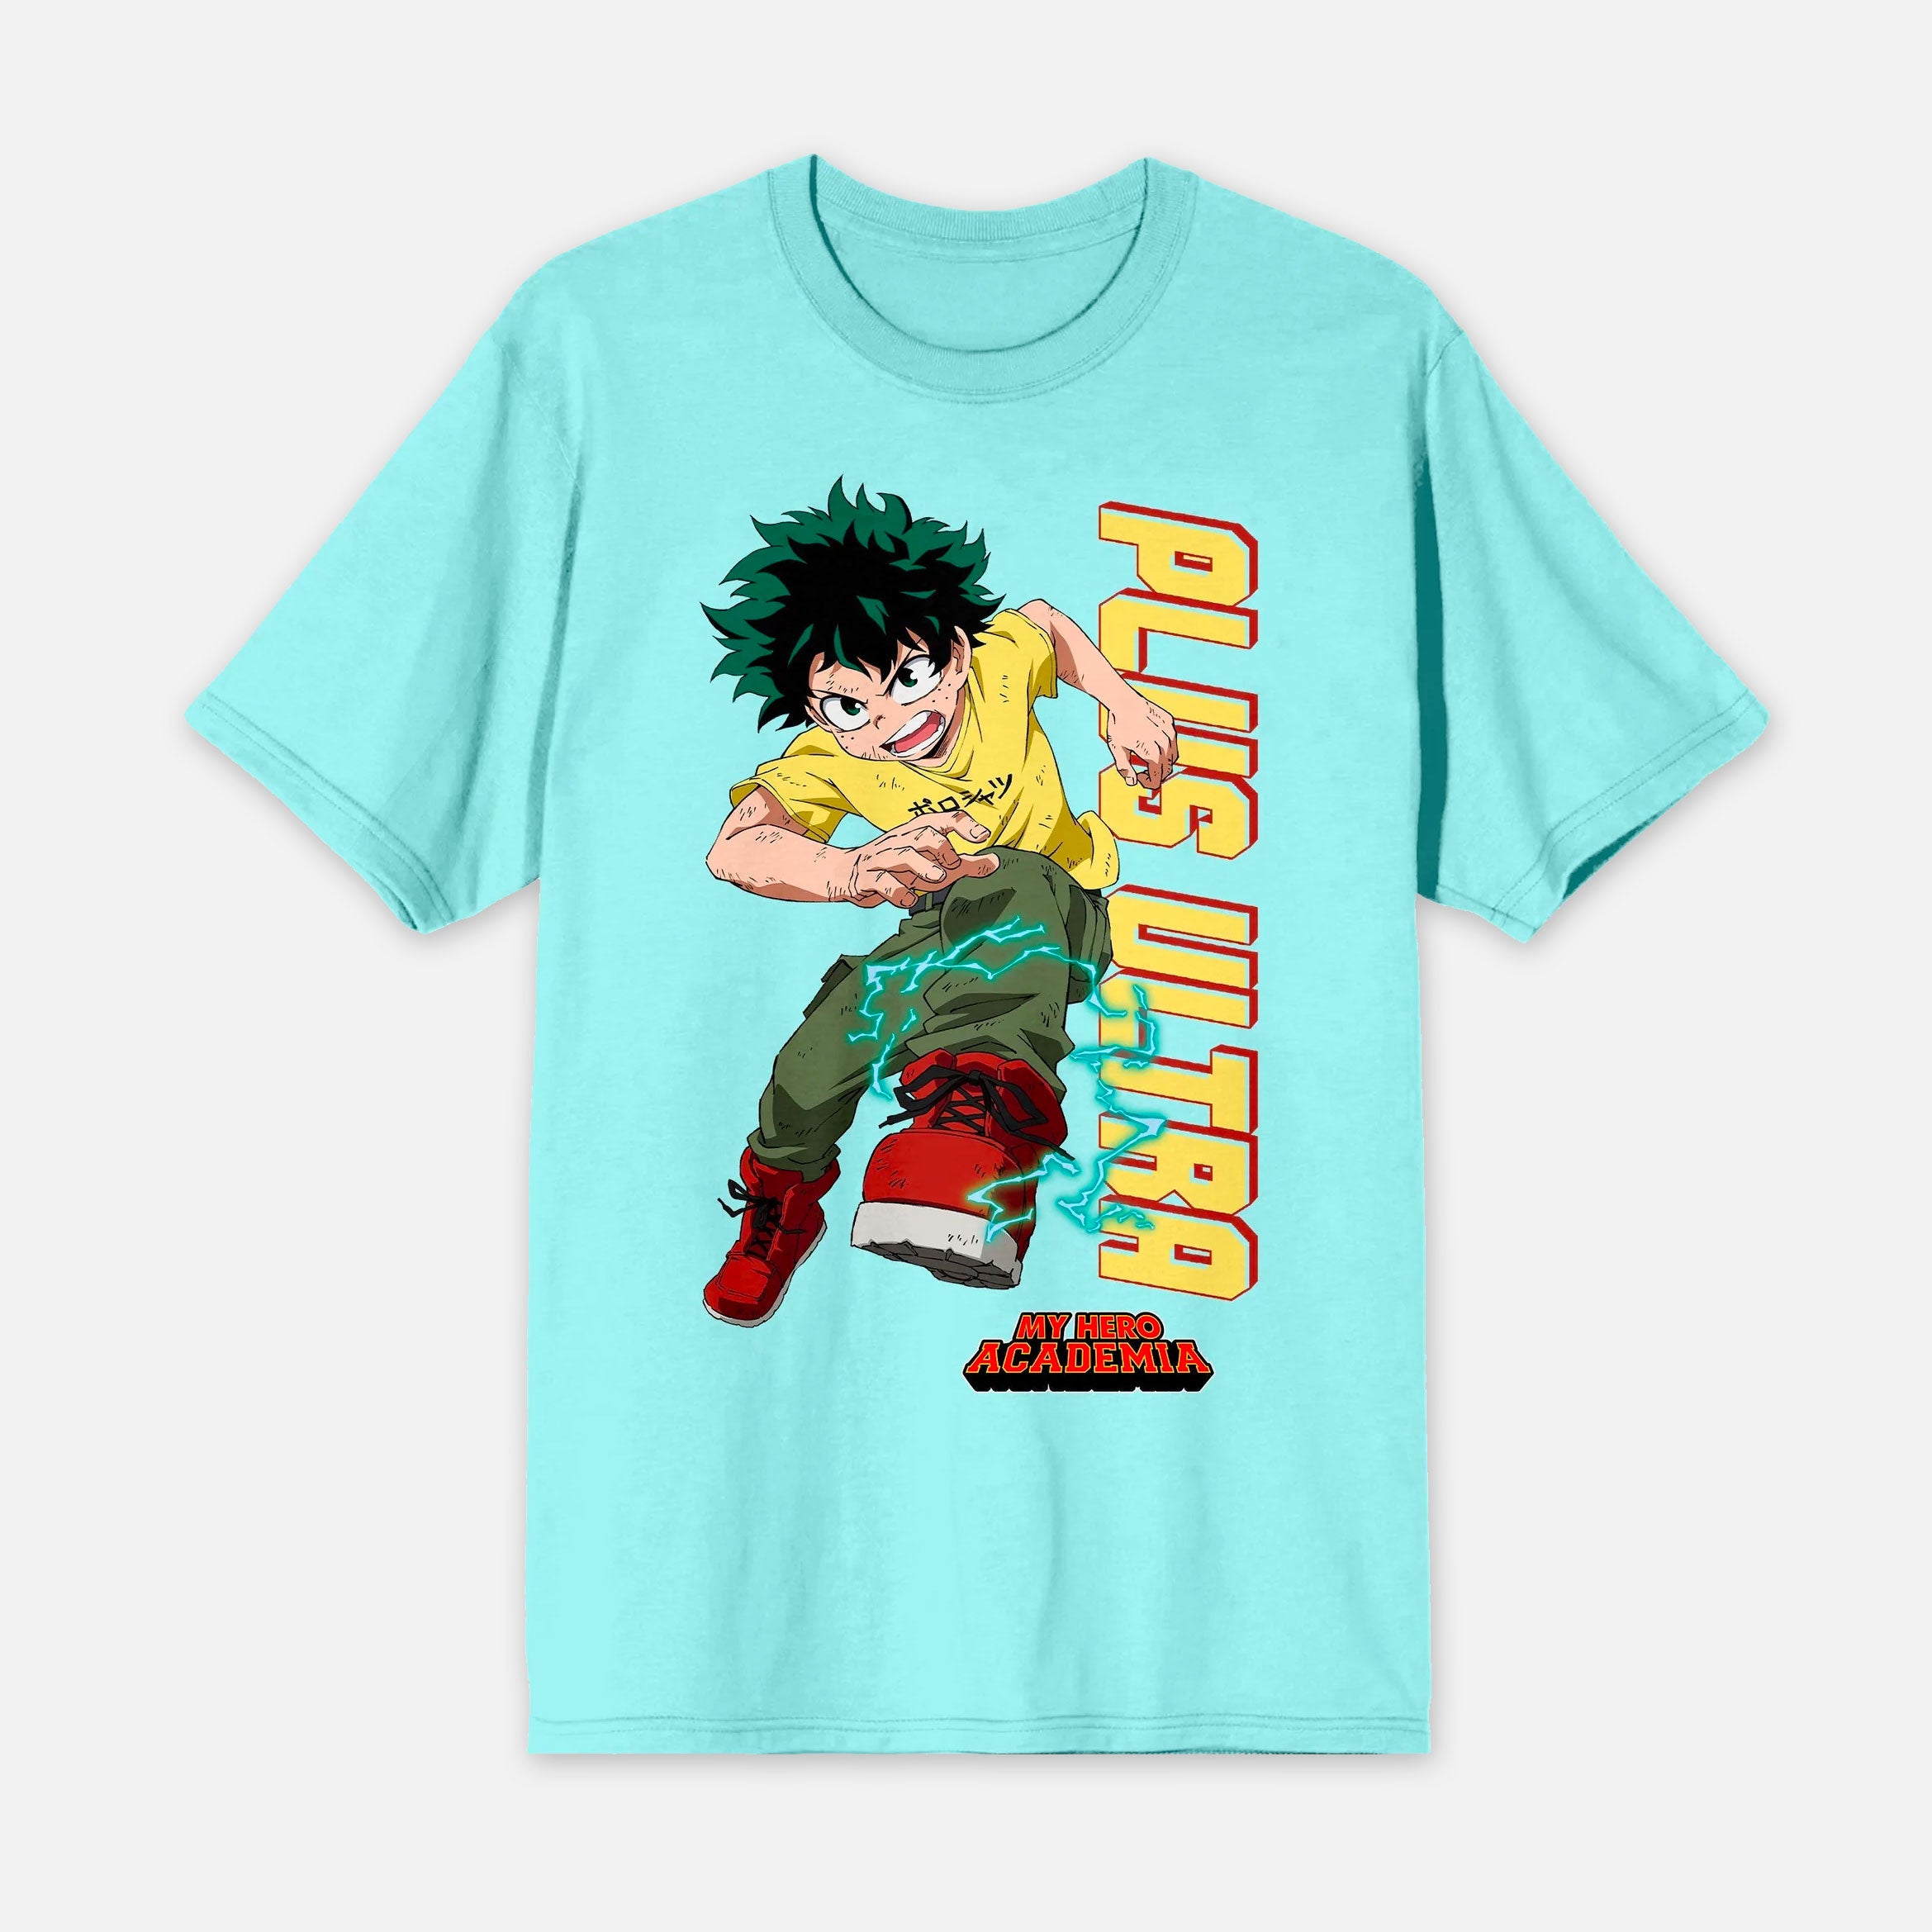 My Hero Academia - Deku Casual Plus Ultra T-Shirt - Crunchyroll Exclusive! image count 0